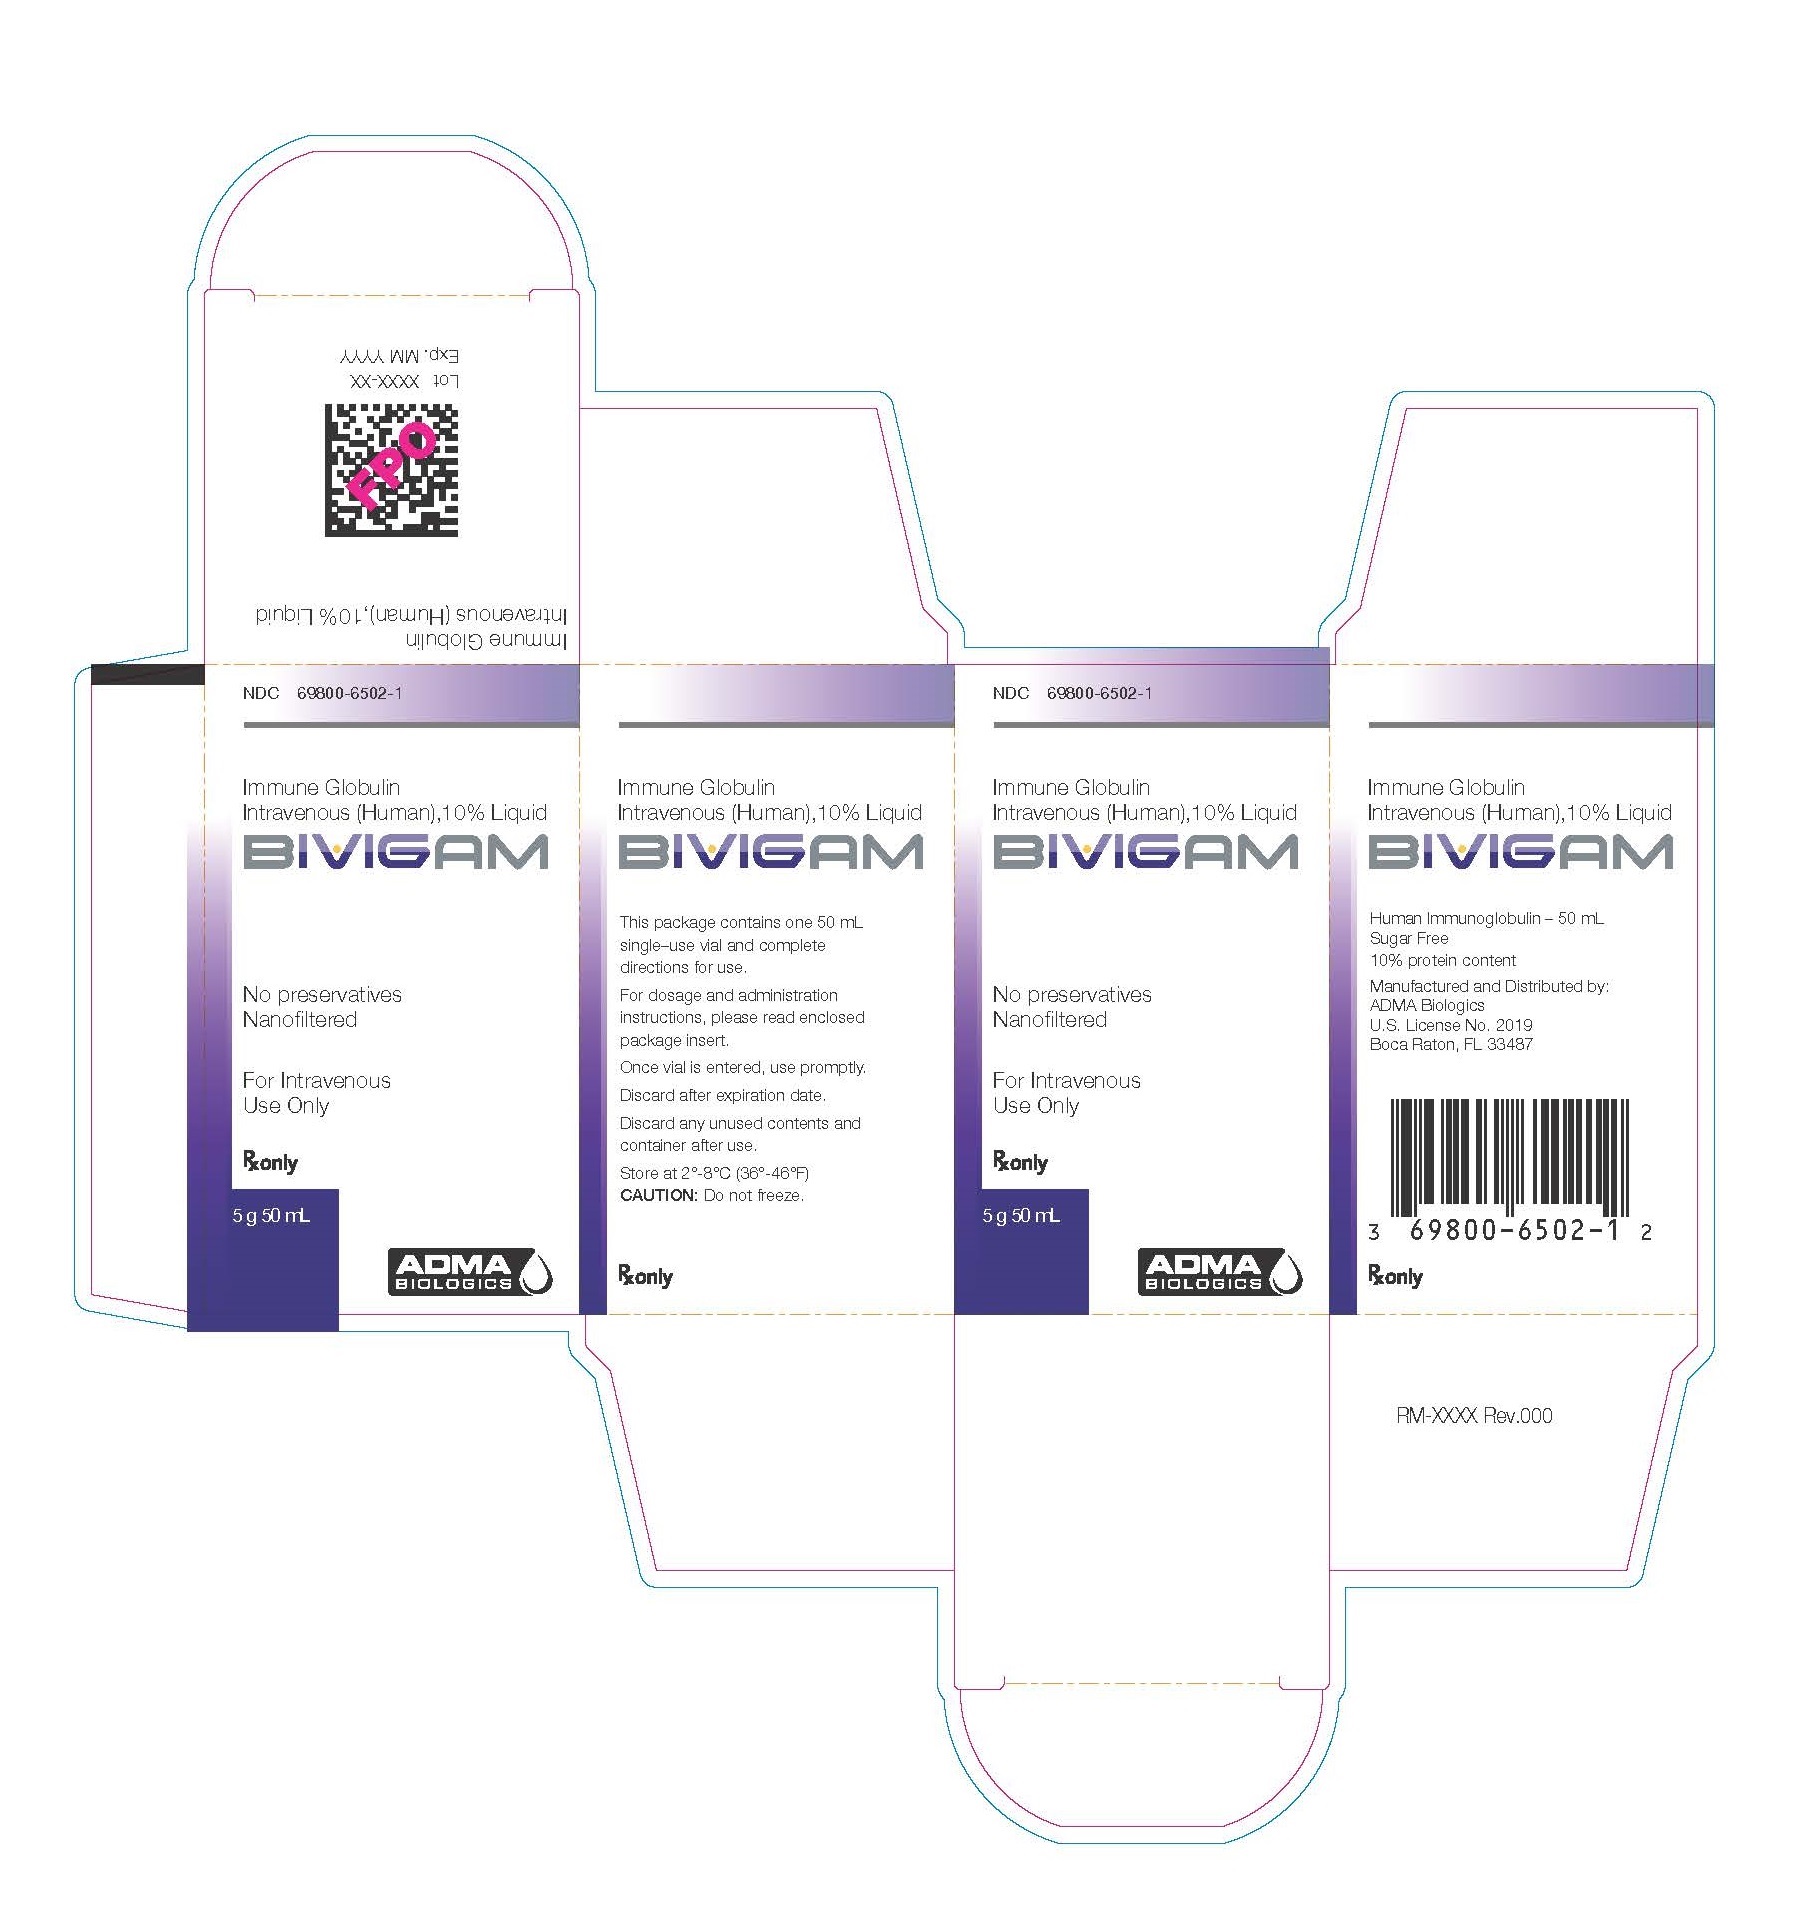 Bivigam - Liquid for Intravenous Injection - 50 mL Carton Label